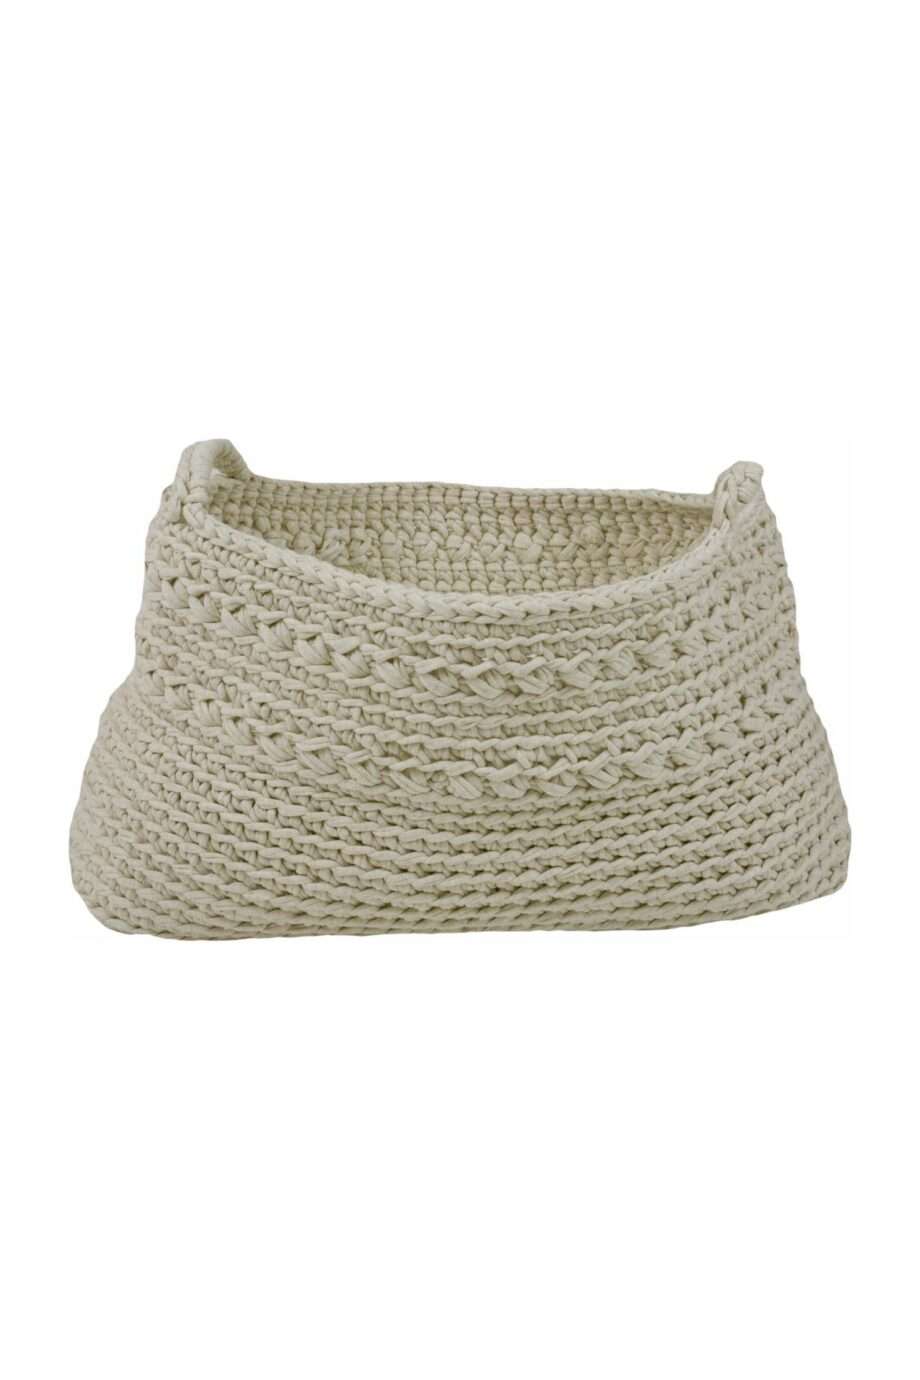 basic ecru crochet cotton basket xxlarge